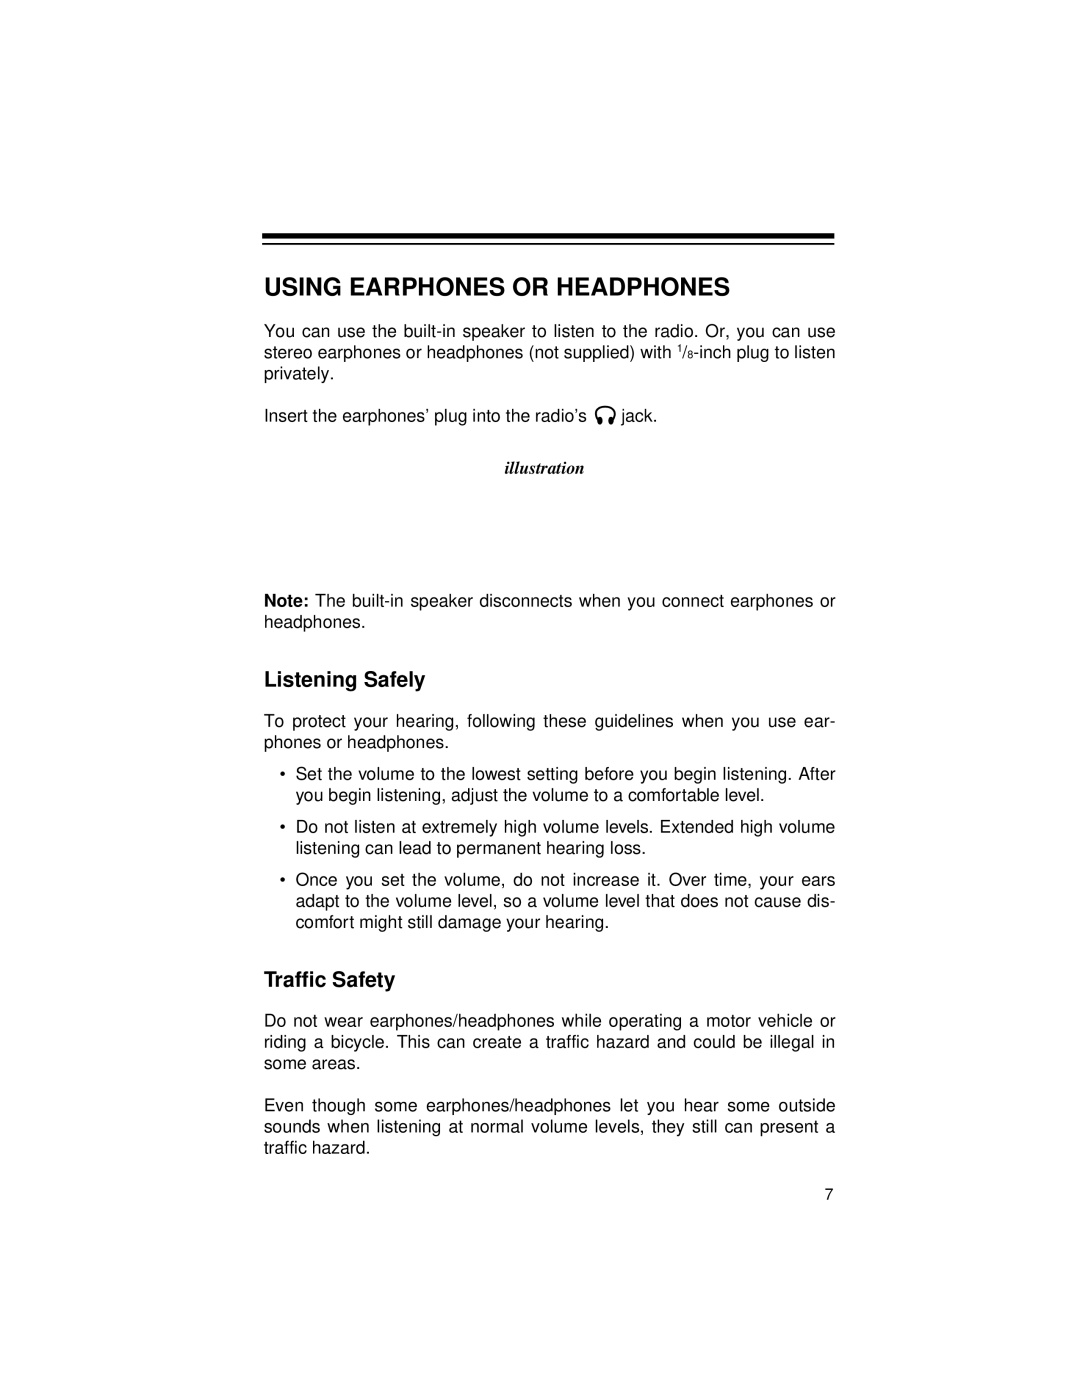 Radio Shack Radio owner manual Using Earphones Or Headphones, Listening Safely, Traffic Safety, illustration 